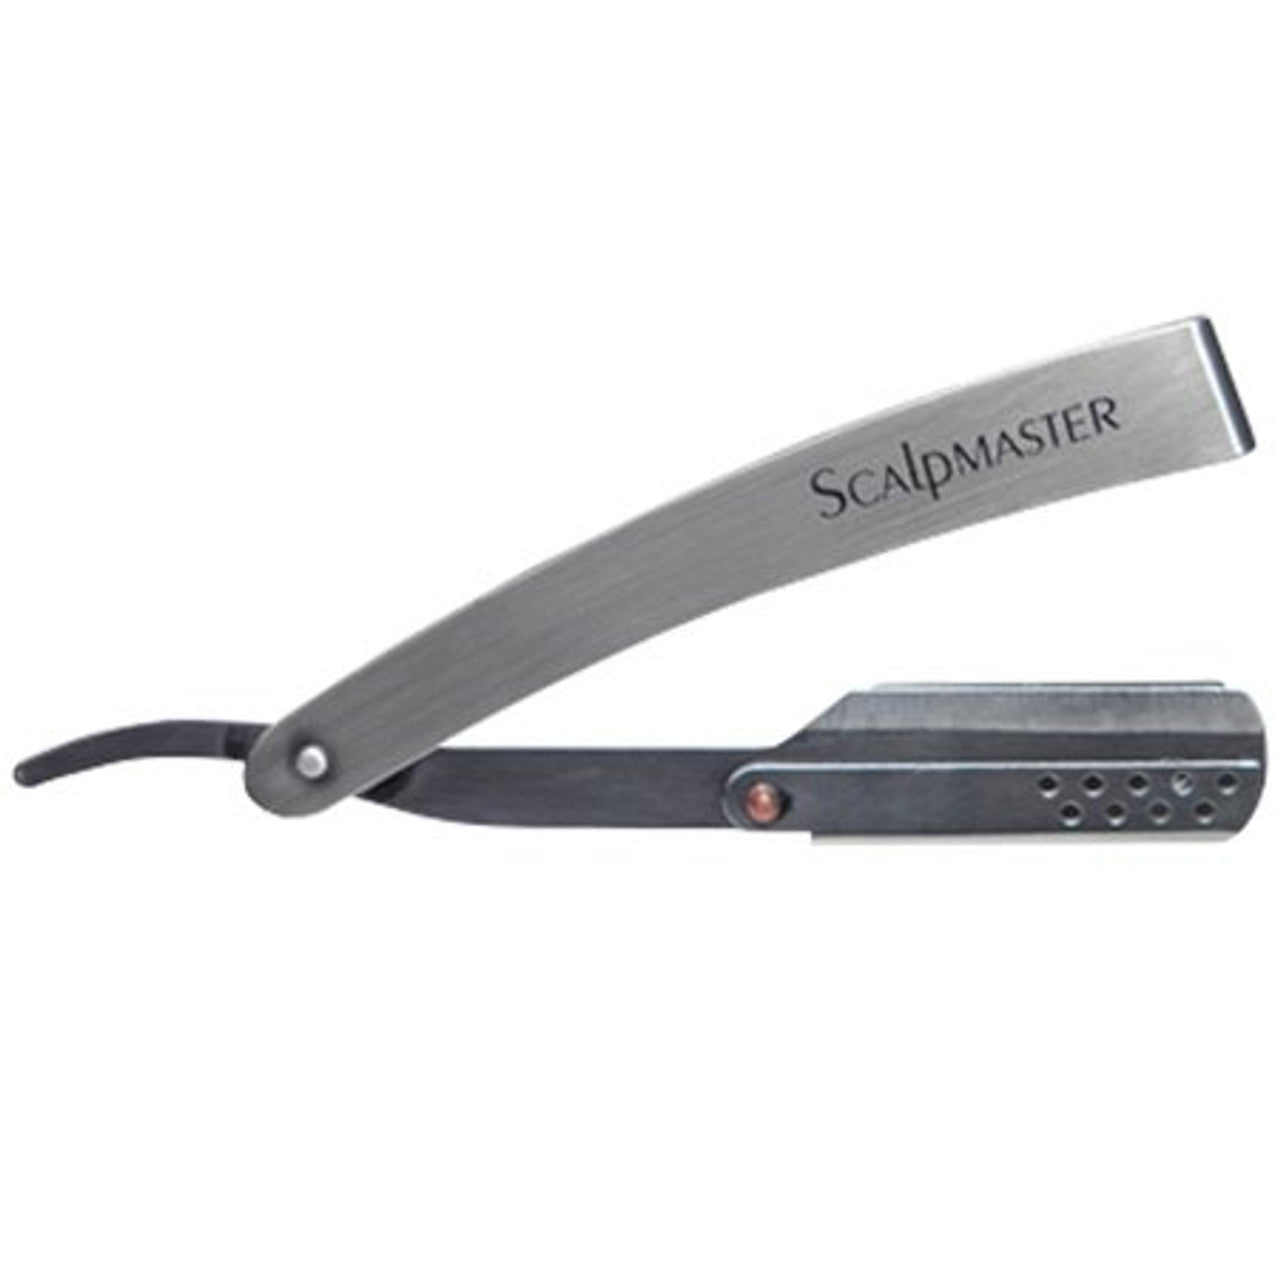 Scalpmaster Professional Stainless Steel Deluxe Straight Razor w/ 5 Double Edge Razor Blades - Silver